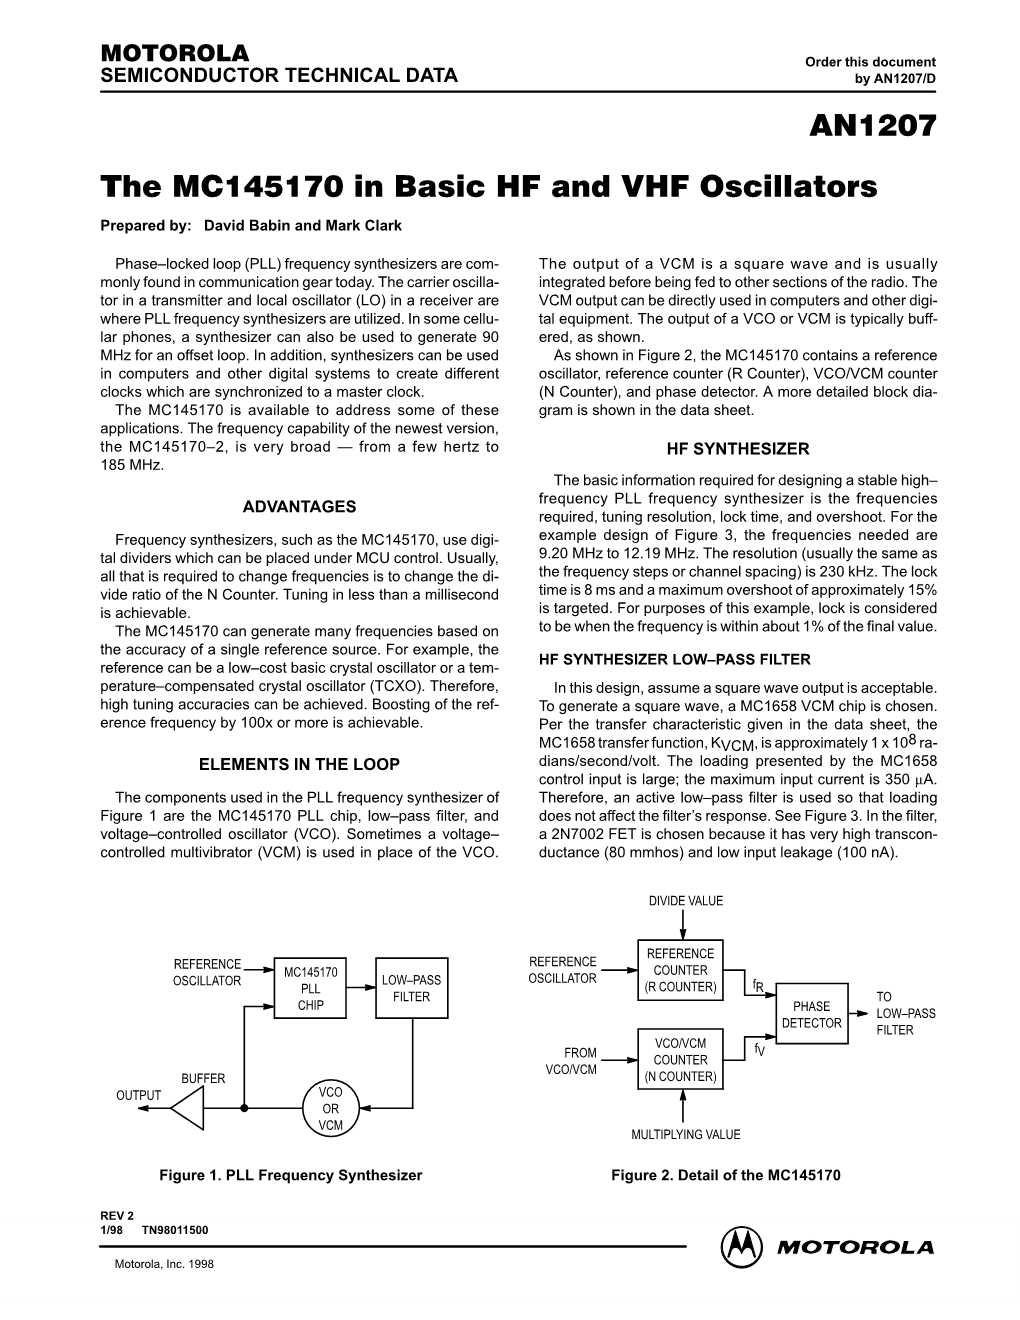 The MC145170 in Basic HF and VHF Oscillators